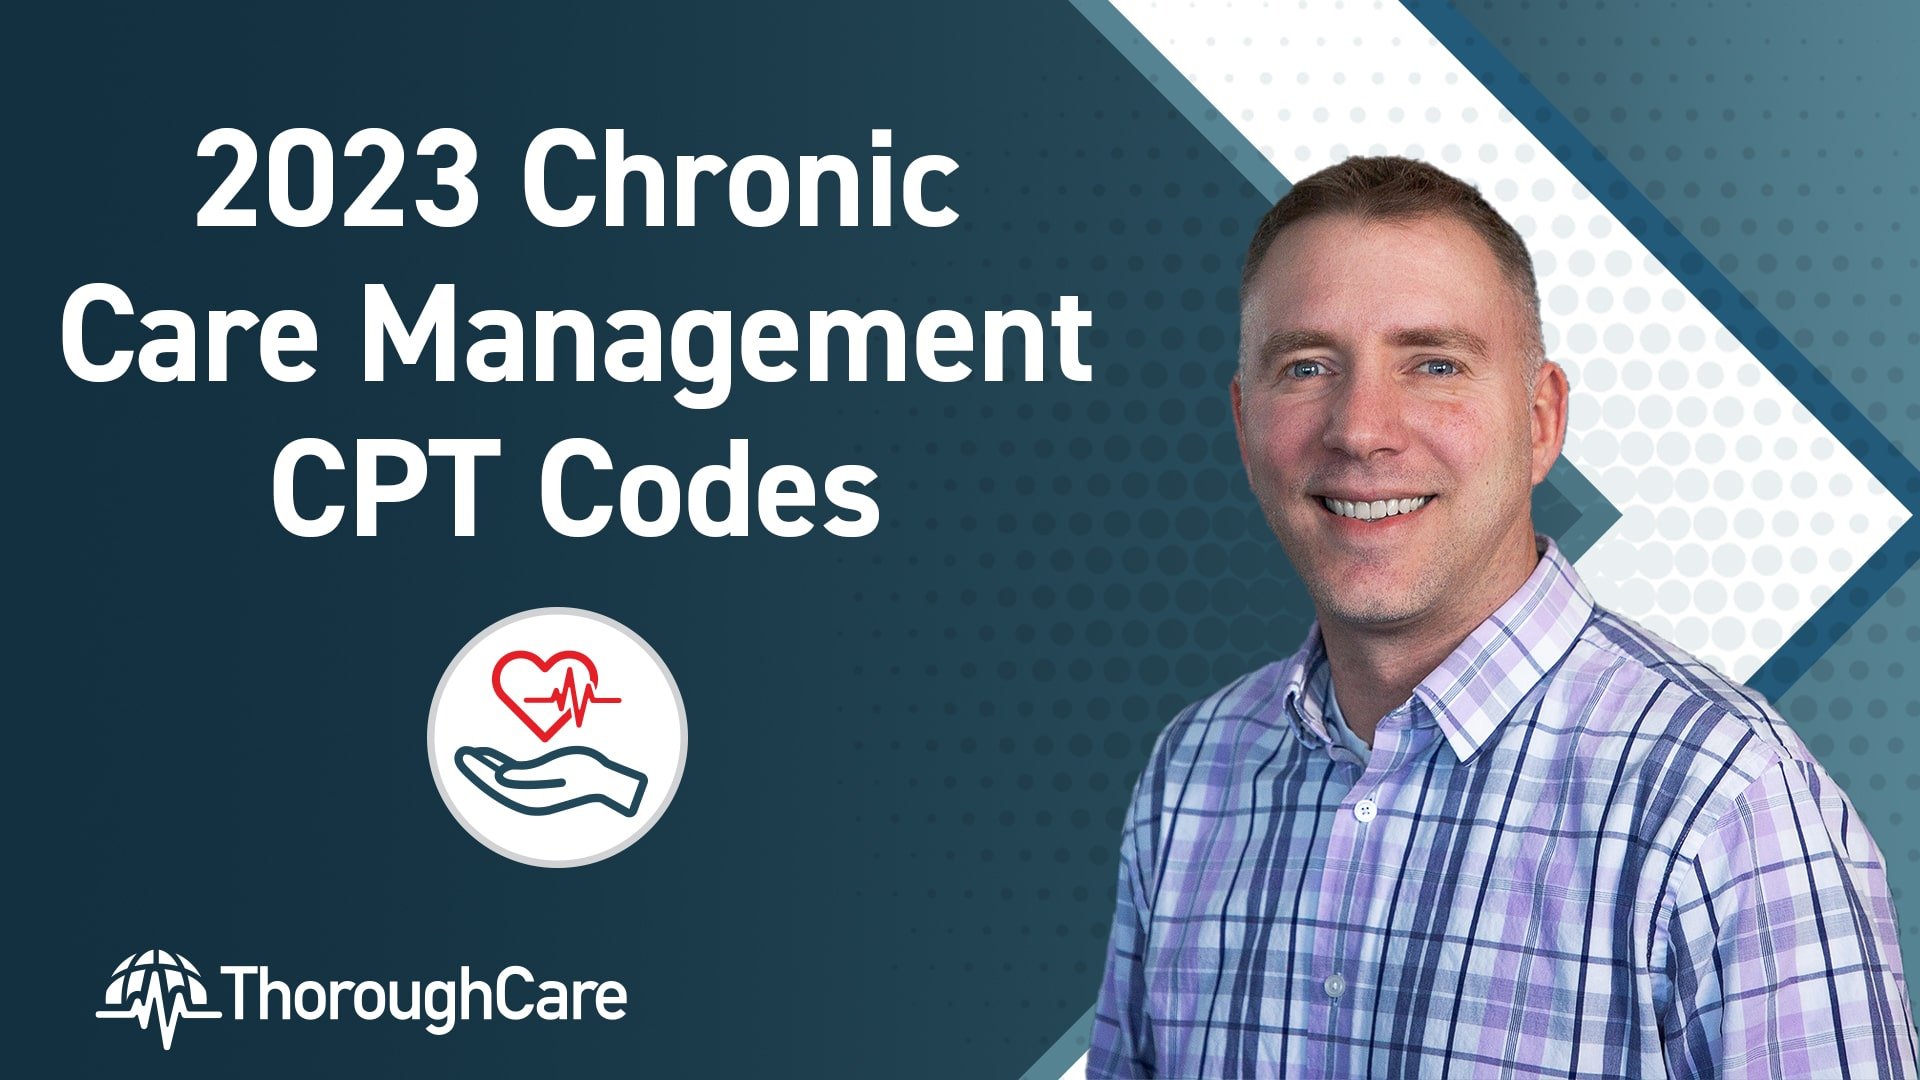 Chronic Care Management: 2023 CPT Codes and Reimbursement Rates